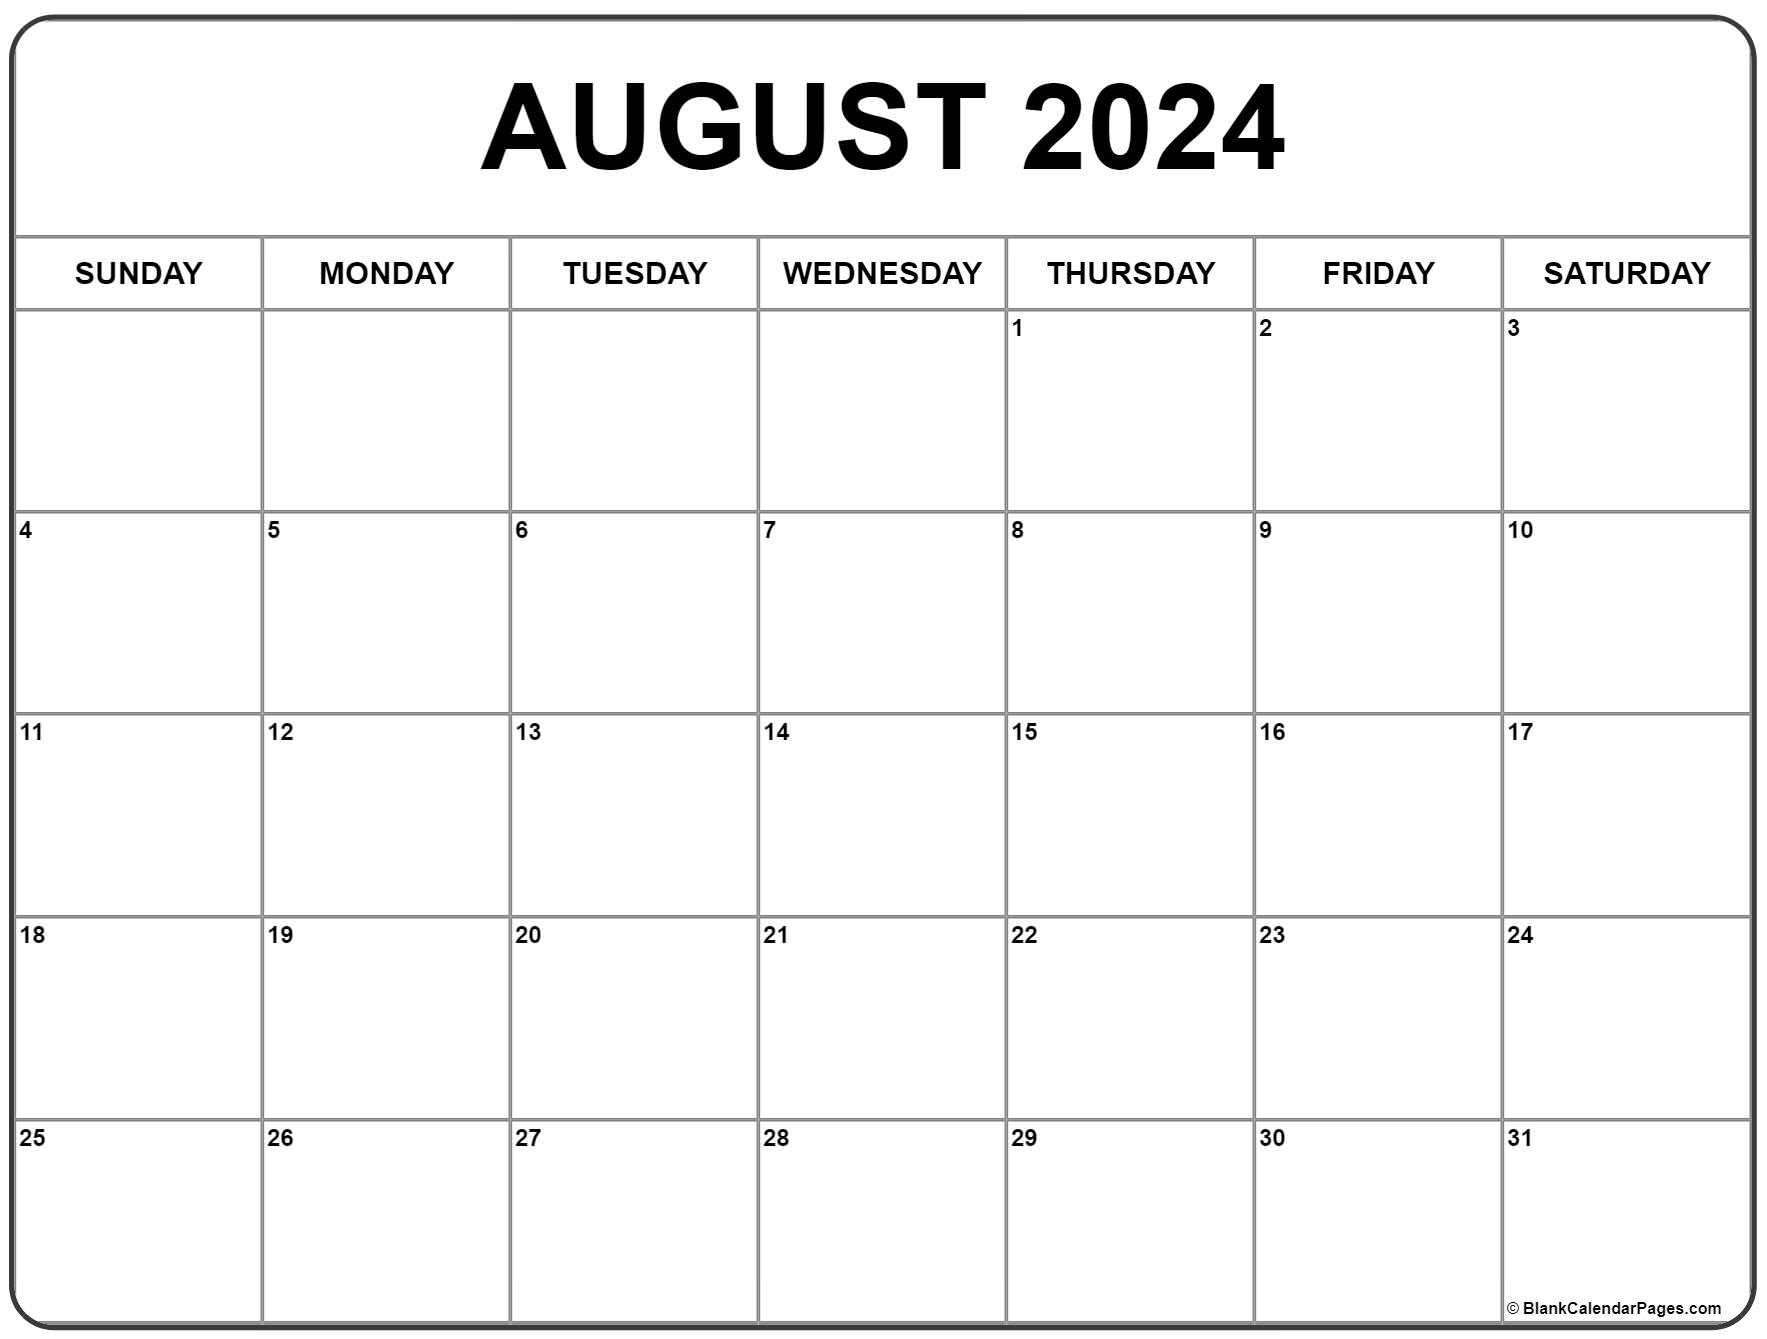 August 2024 Calendar | Free Printable Calendar for Free August 2024 Printable Calendar